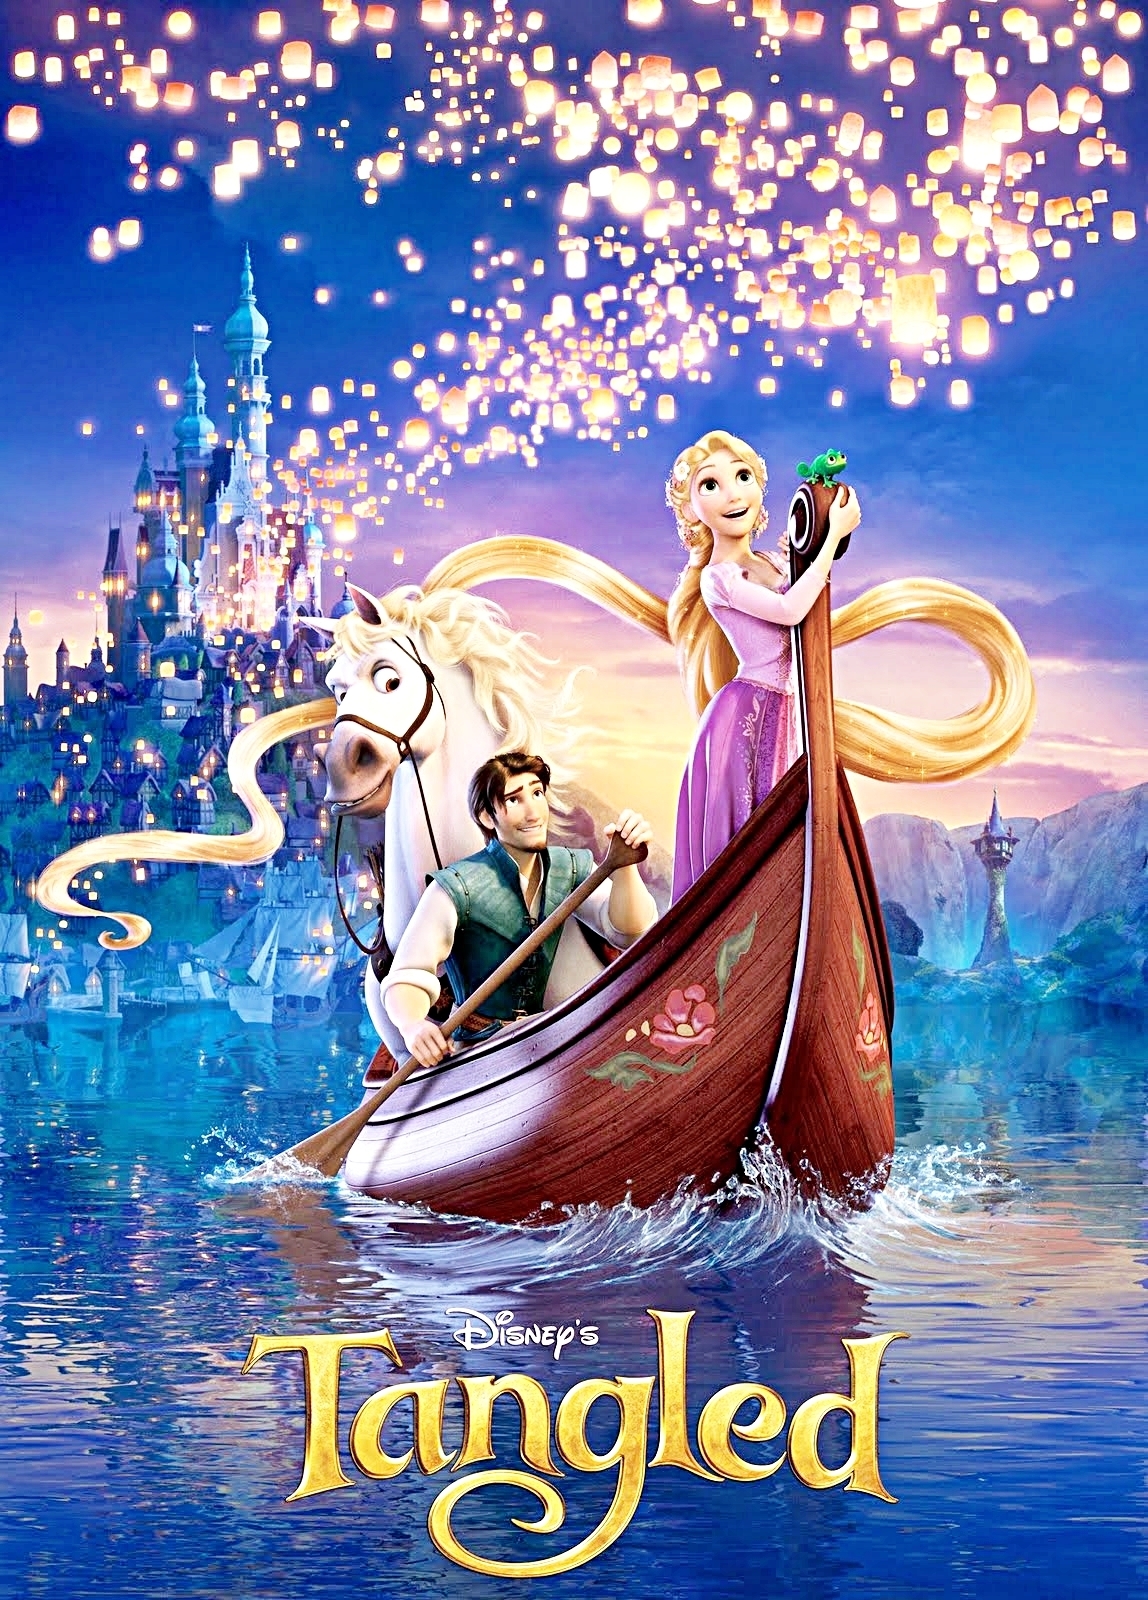 Rapunzel O Poveste Incalcita 2 Dublat In Romana Tangled - O poveste incalcita online dublat in romana